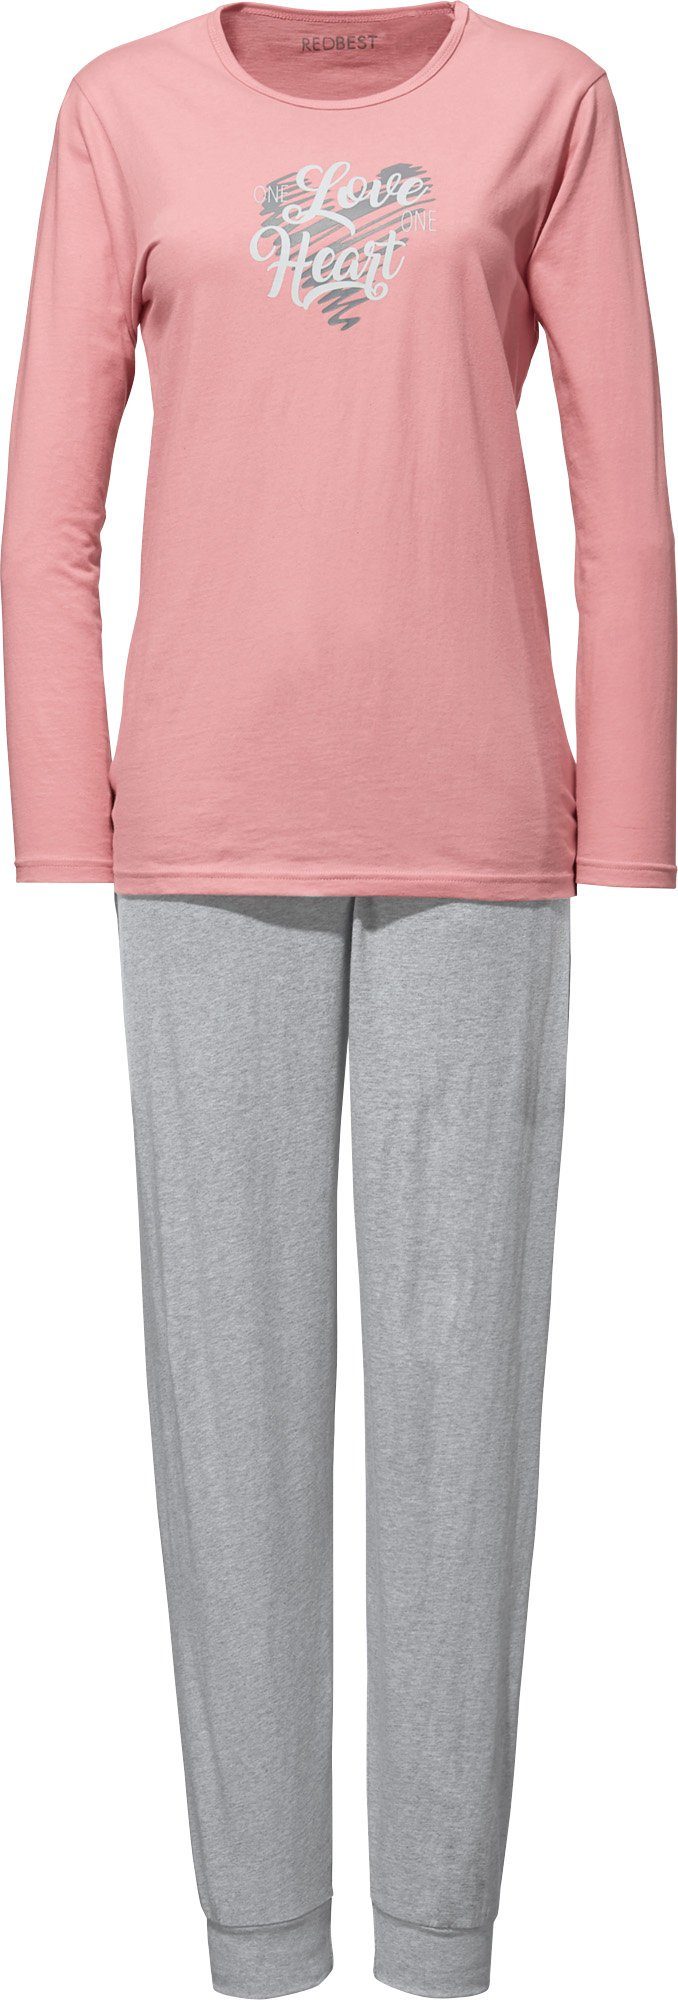 REDBEST Pyjama Damen-Schlafanzug Single-Jersey Uni